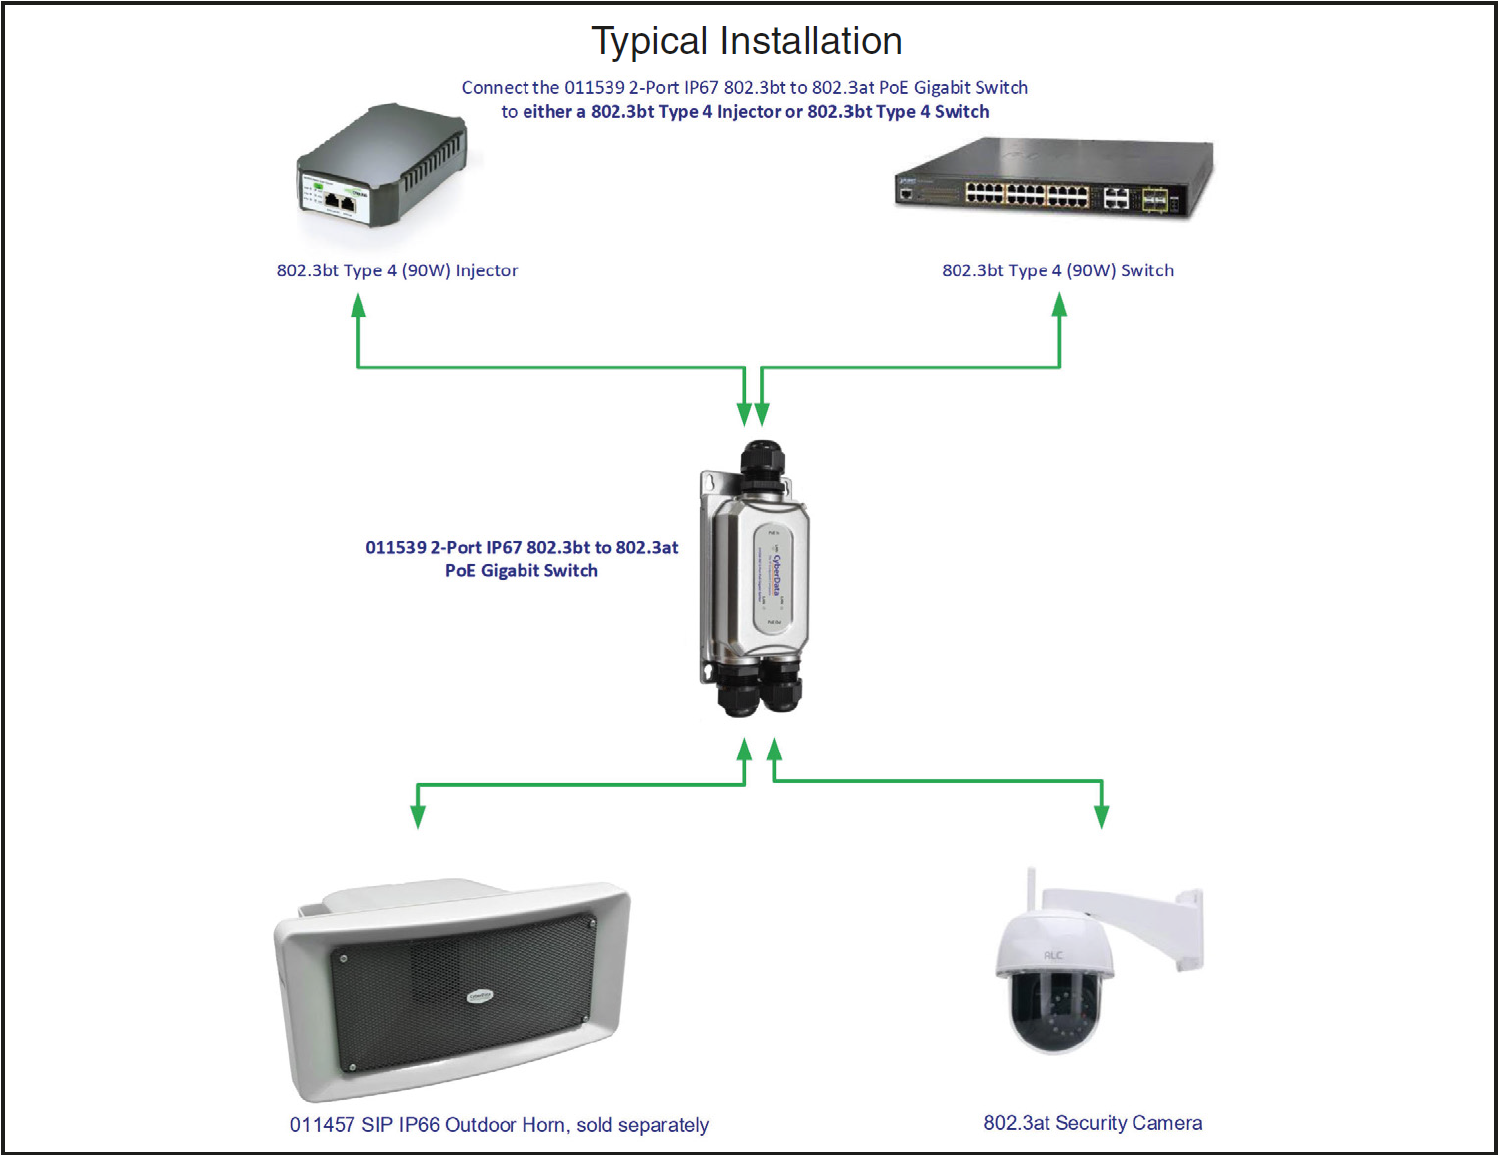 CyberData 3-Port Gigabit Ethernet Switch - switch - 3 ports - 011236 - Ethernet  Switches 